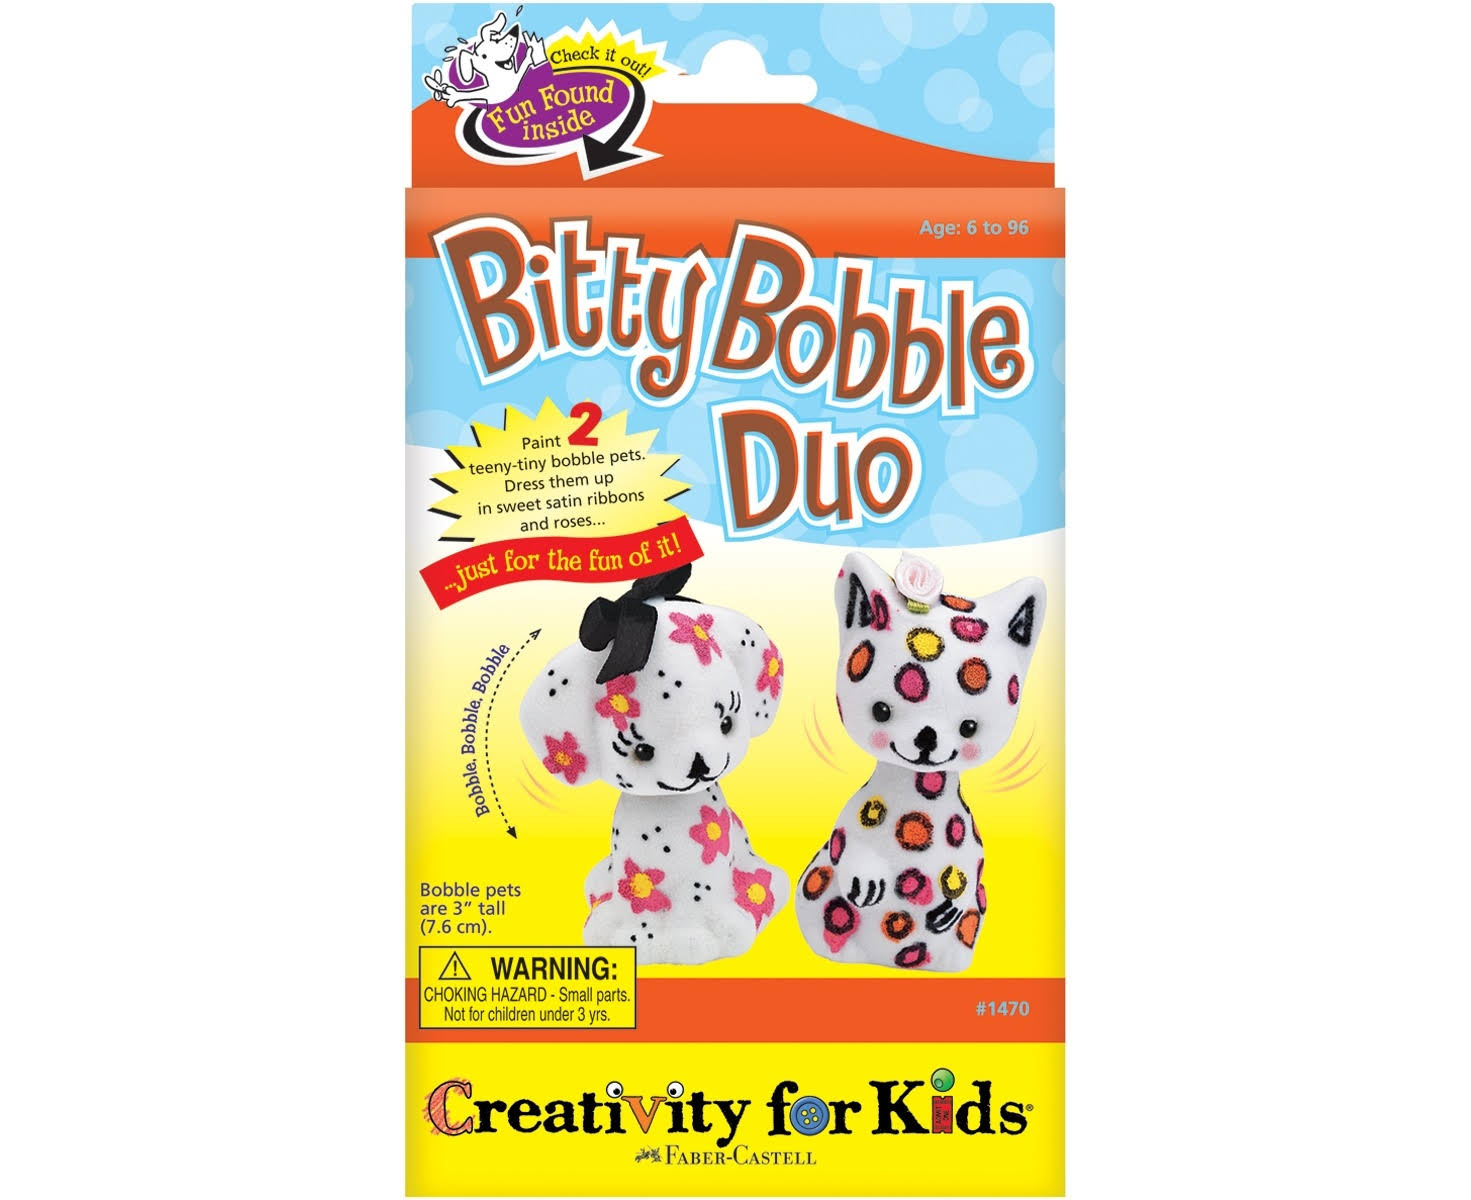 Creativity for Kids Bitty Bobble Duo Kit